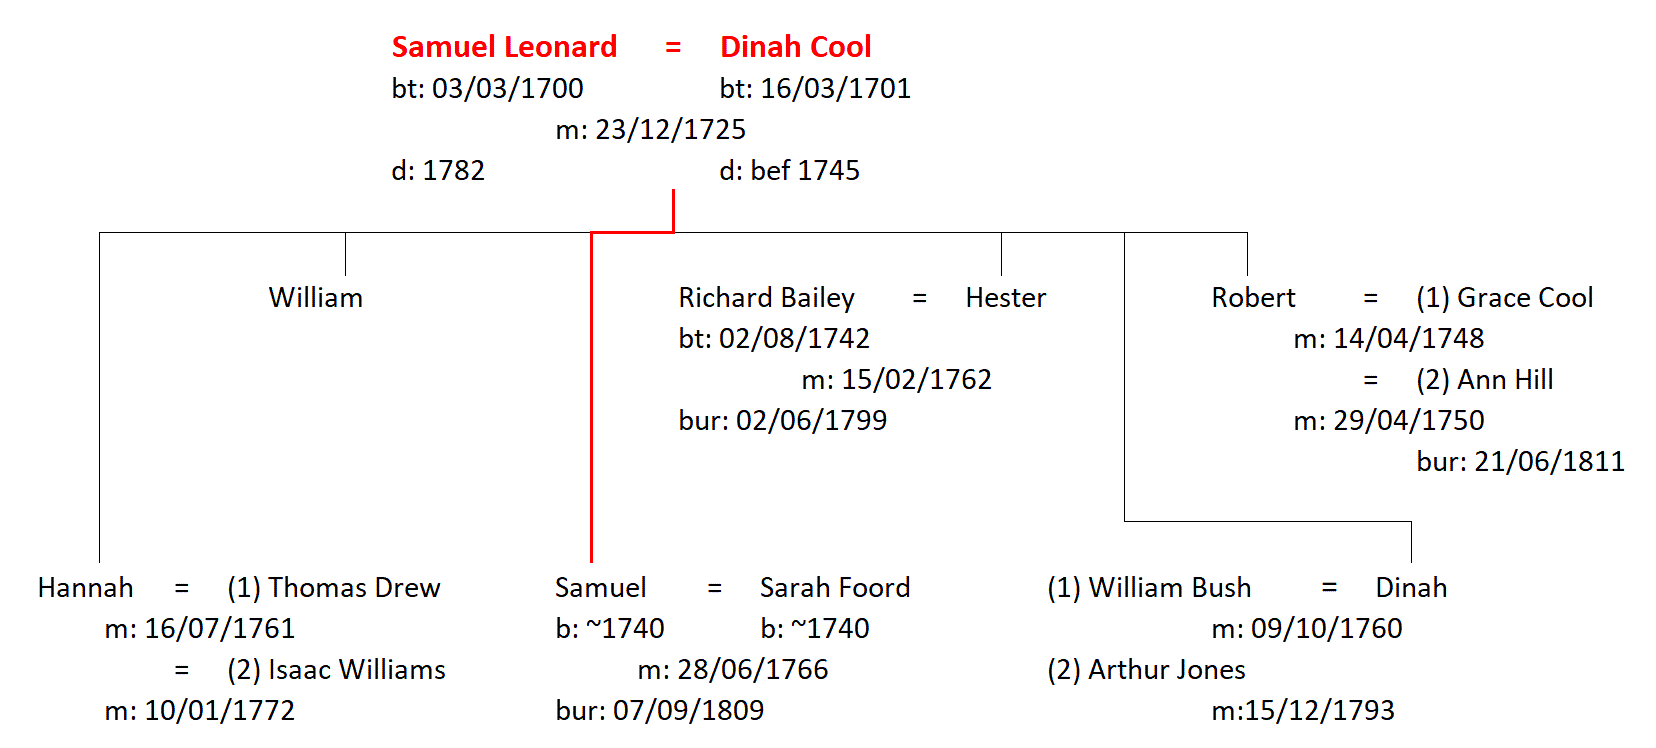 Figure 2: The Family of Samuel and Dinah Leonard